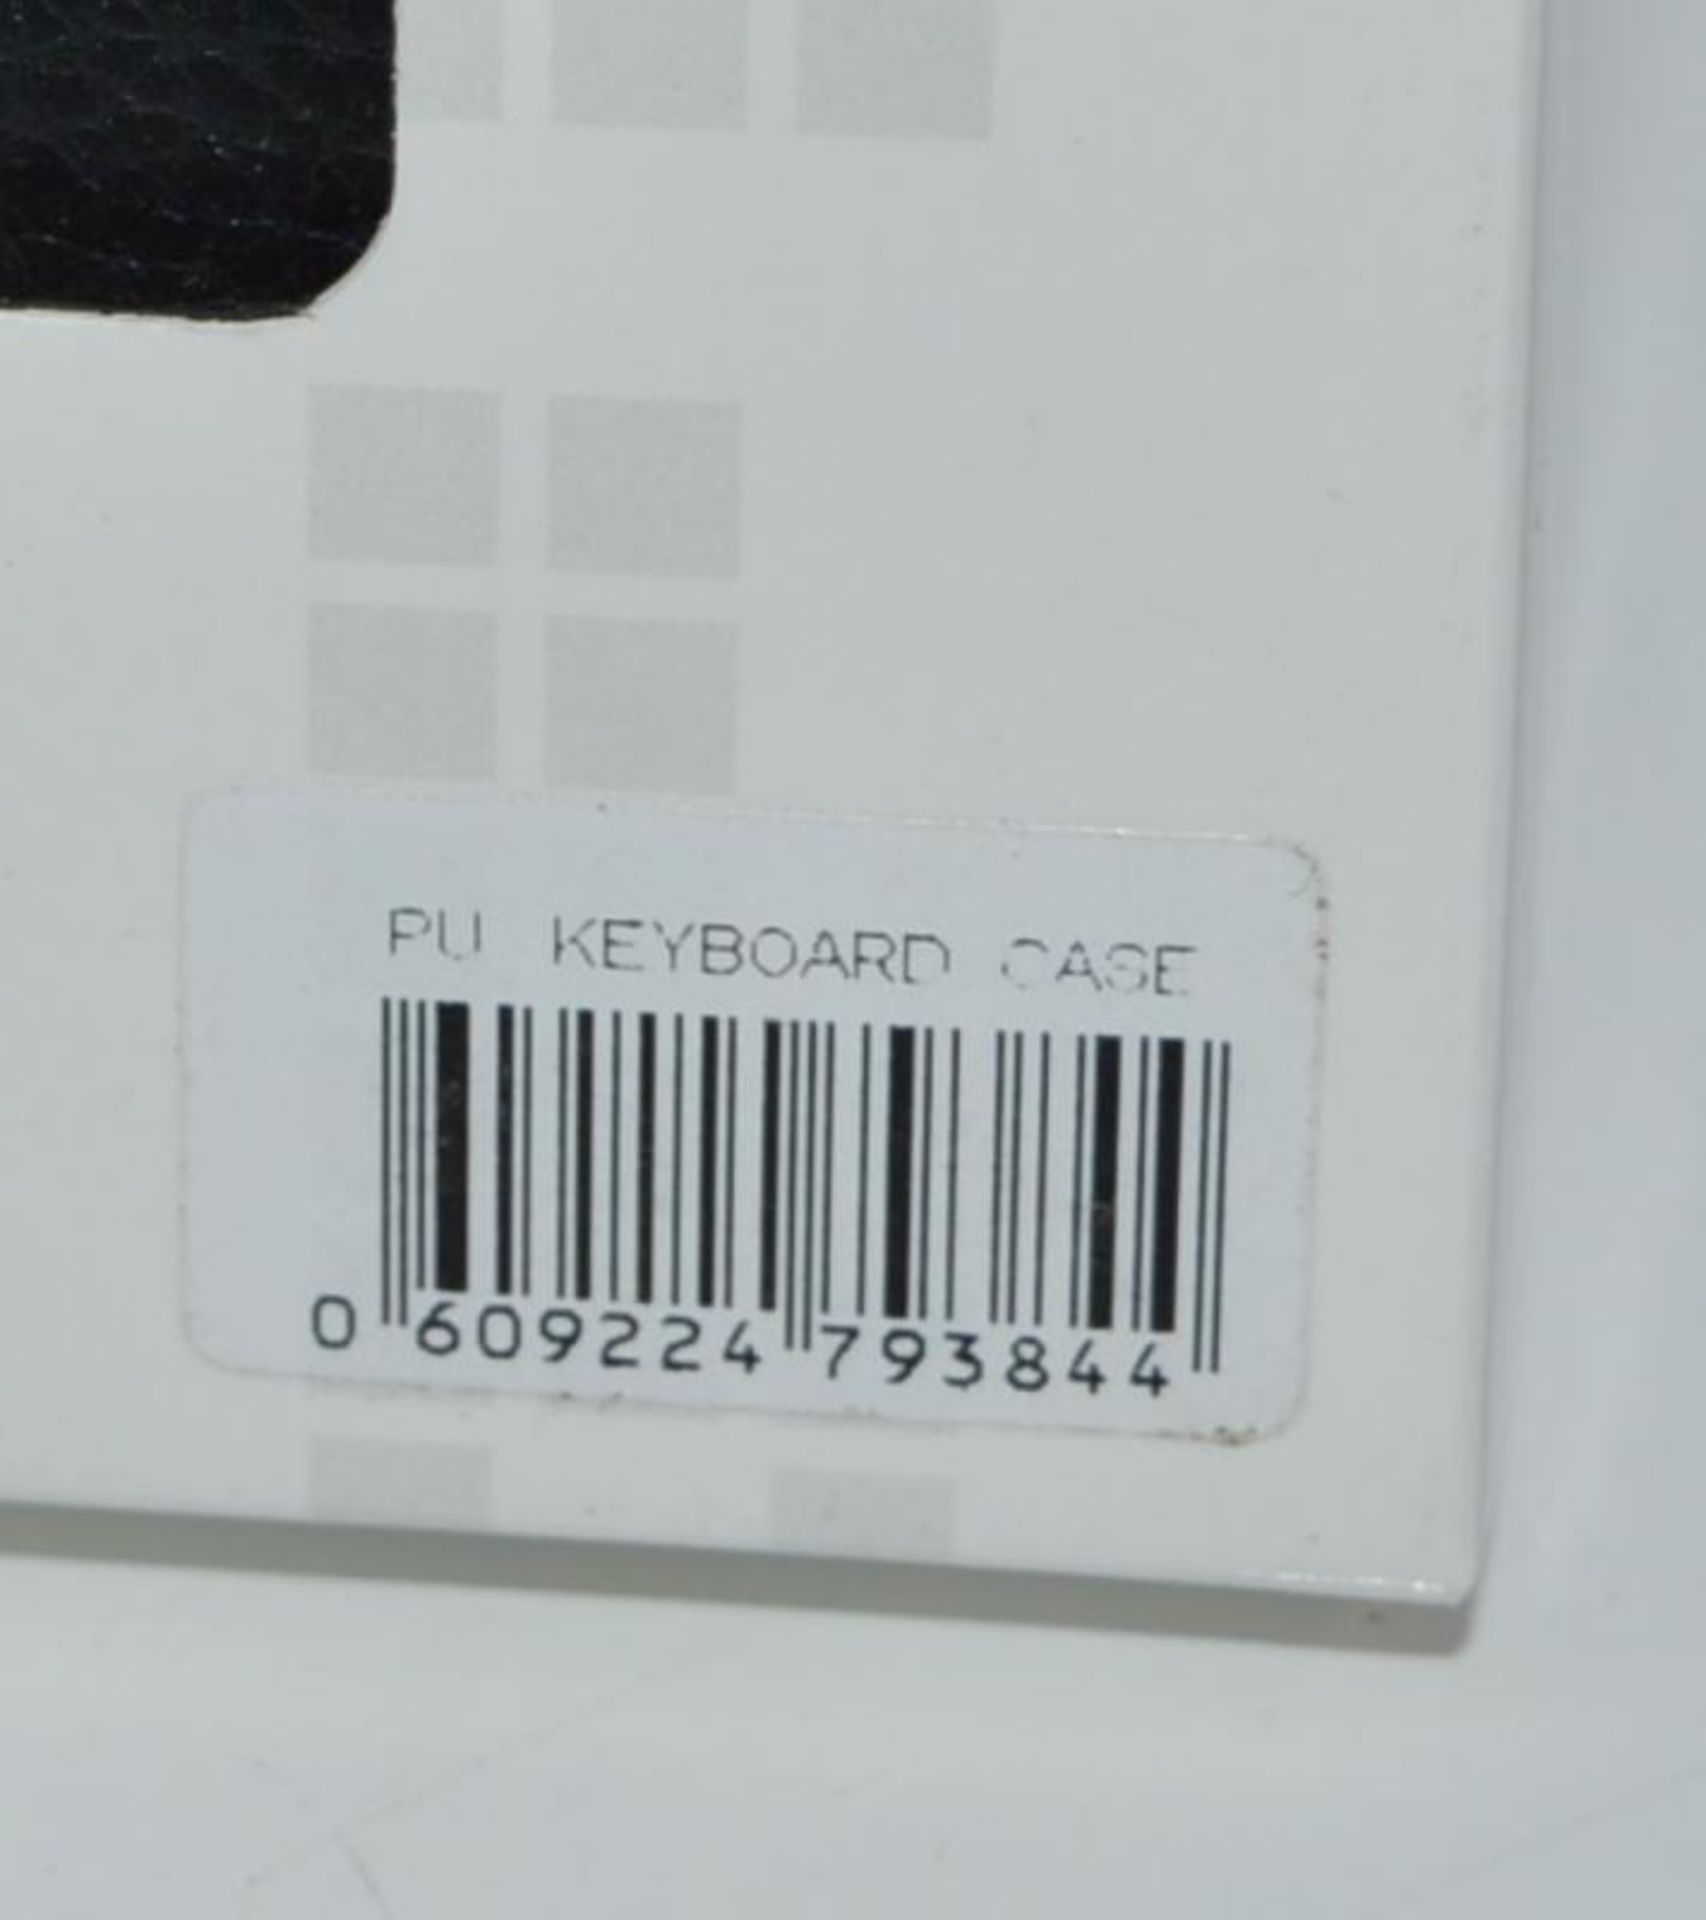 1 x Mi PU Leather IPAD CASE With Integrated Bluetooth 2.0 Keyboard - Wireless Keyboard, Upto 90 Hour - Image 4 of 4